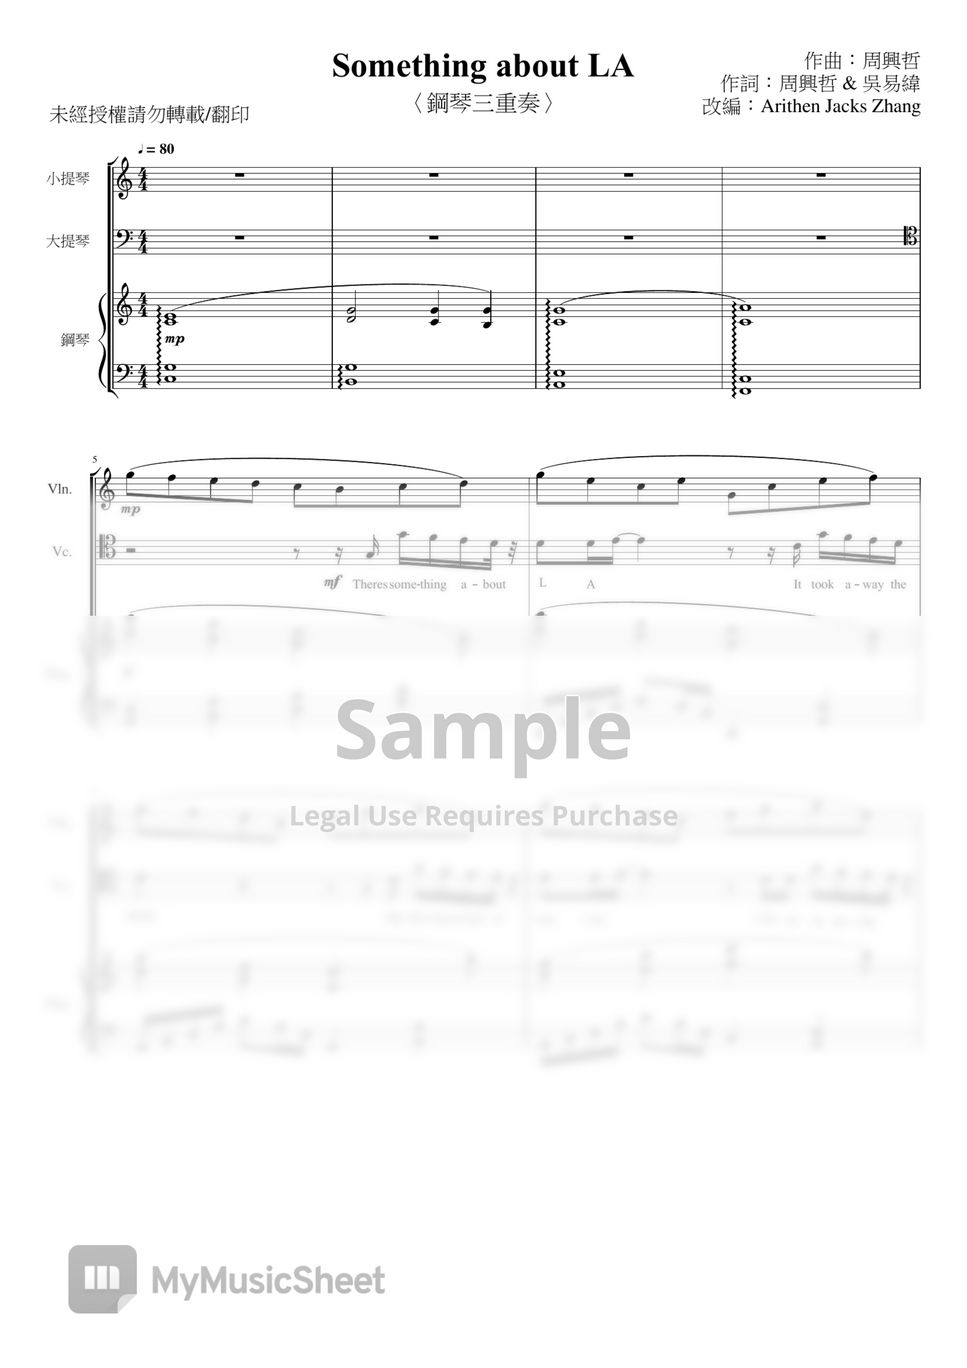 Eric Zhou (周興哲) - Something about LA (Piano trio) by Arithen Jacks Zhang (紫艾)